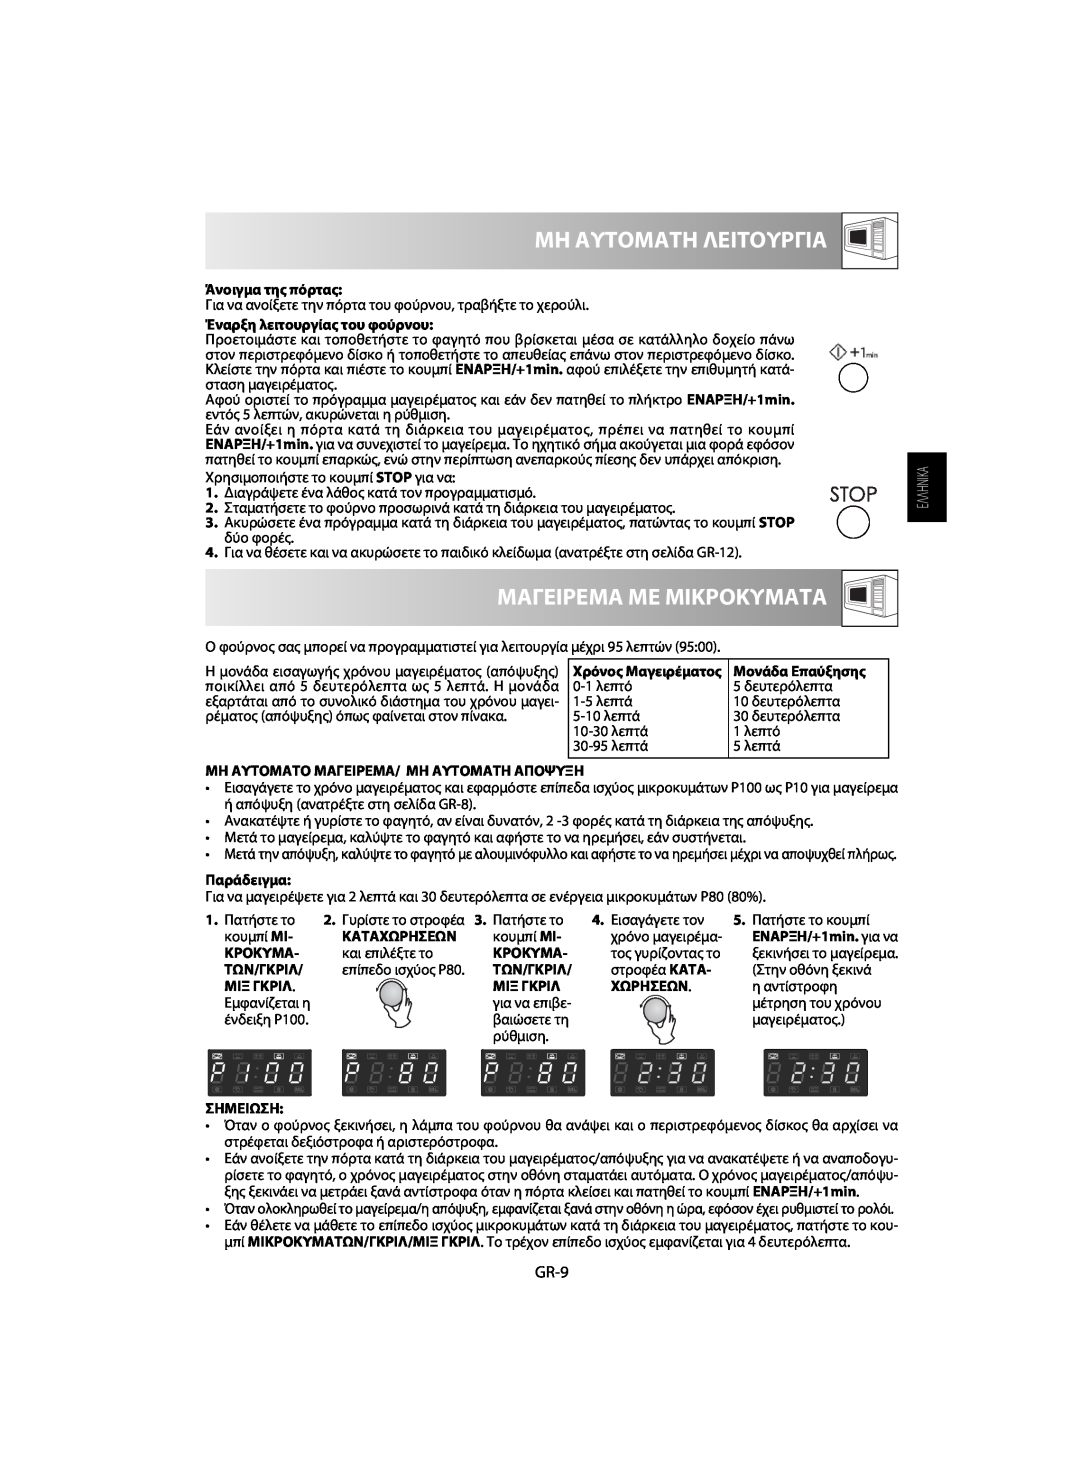 Sharp R-63ST operation manual Μη Αυτοματη Λειτουργια, Μαγειρεμα Με Μικροκυματα, GR-9 